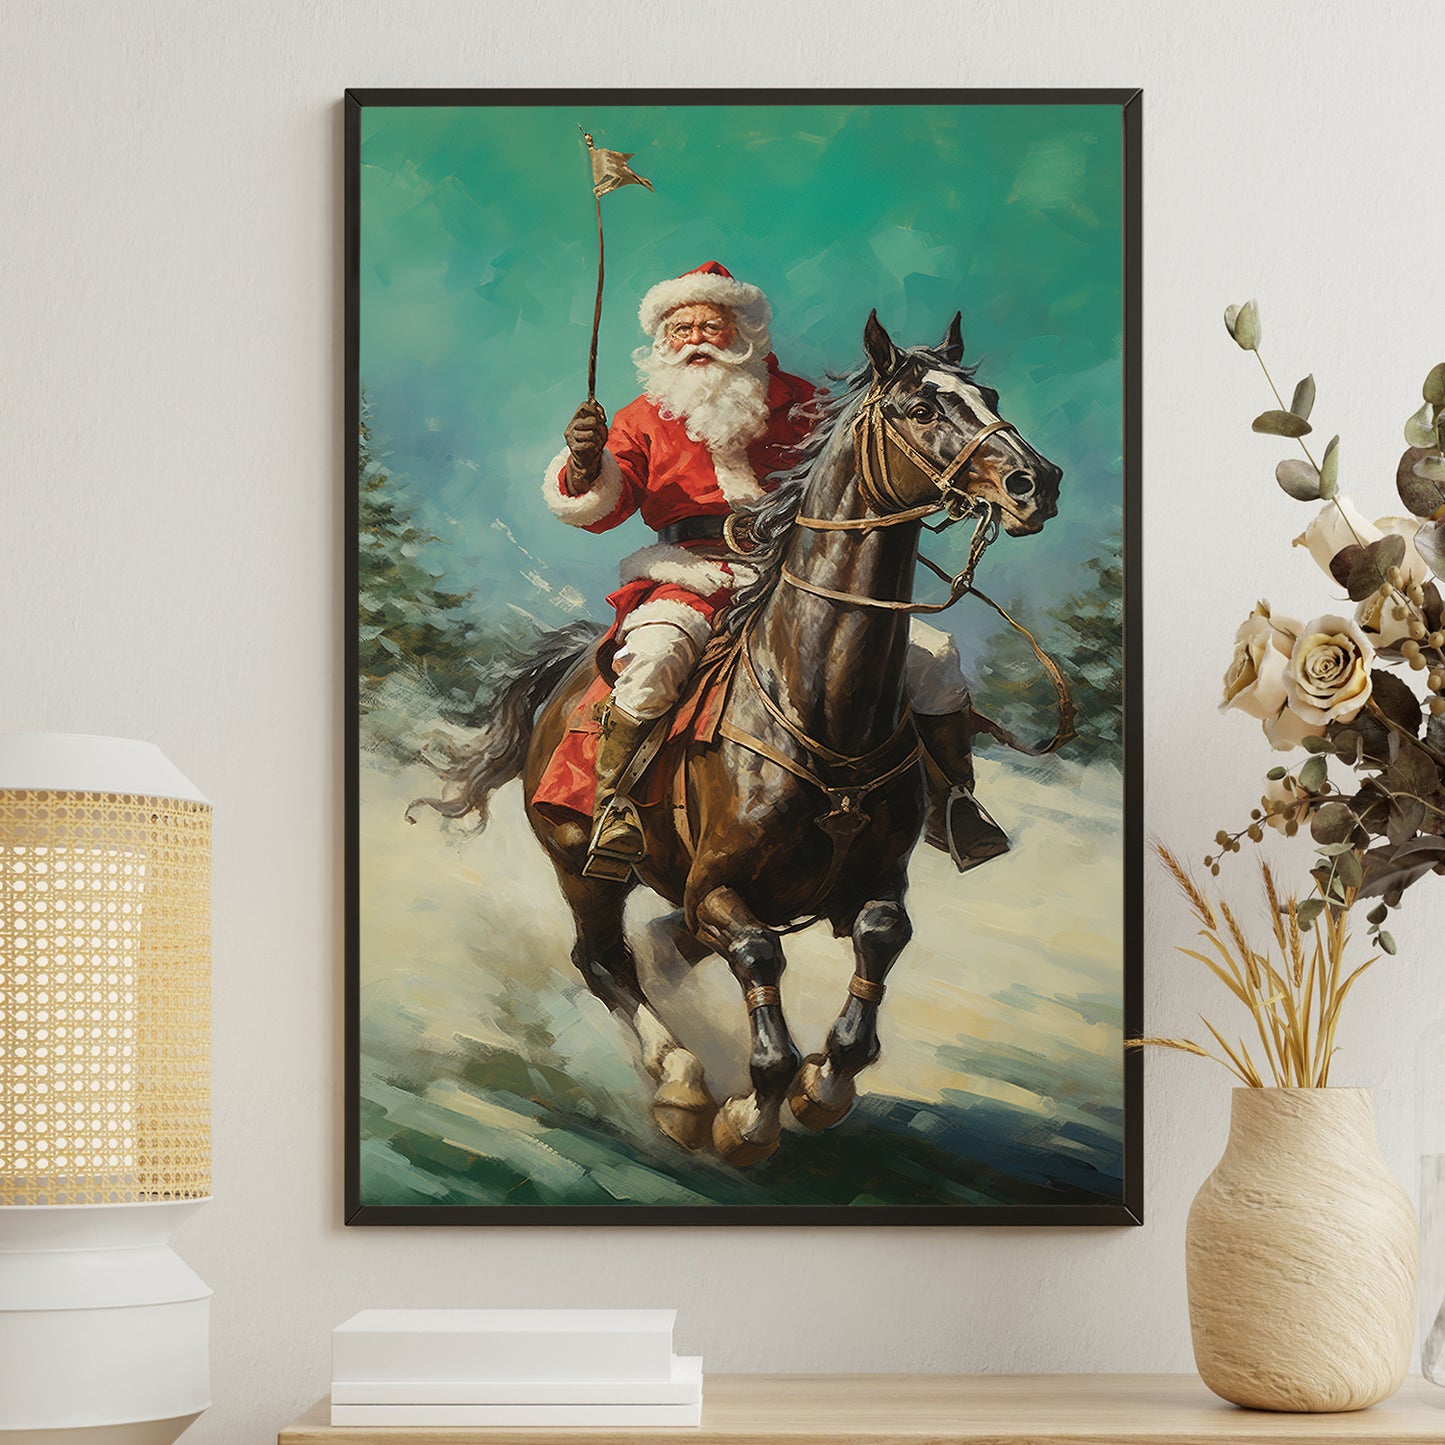 Christmas Santa Claus' w/ Horses Canvas Wall Art Painting Artwork 24x36 inch, Size: 24 x 36